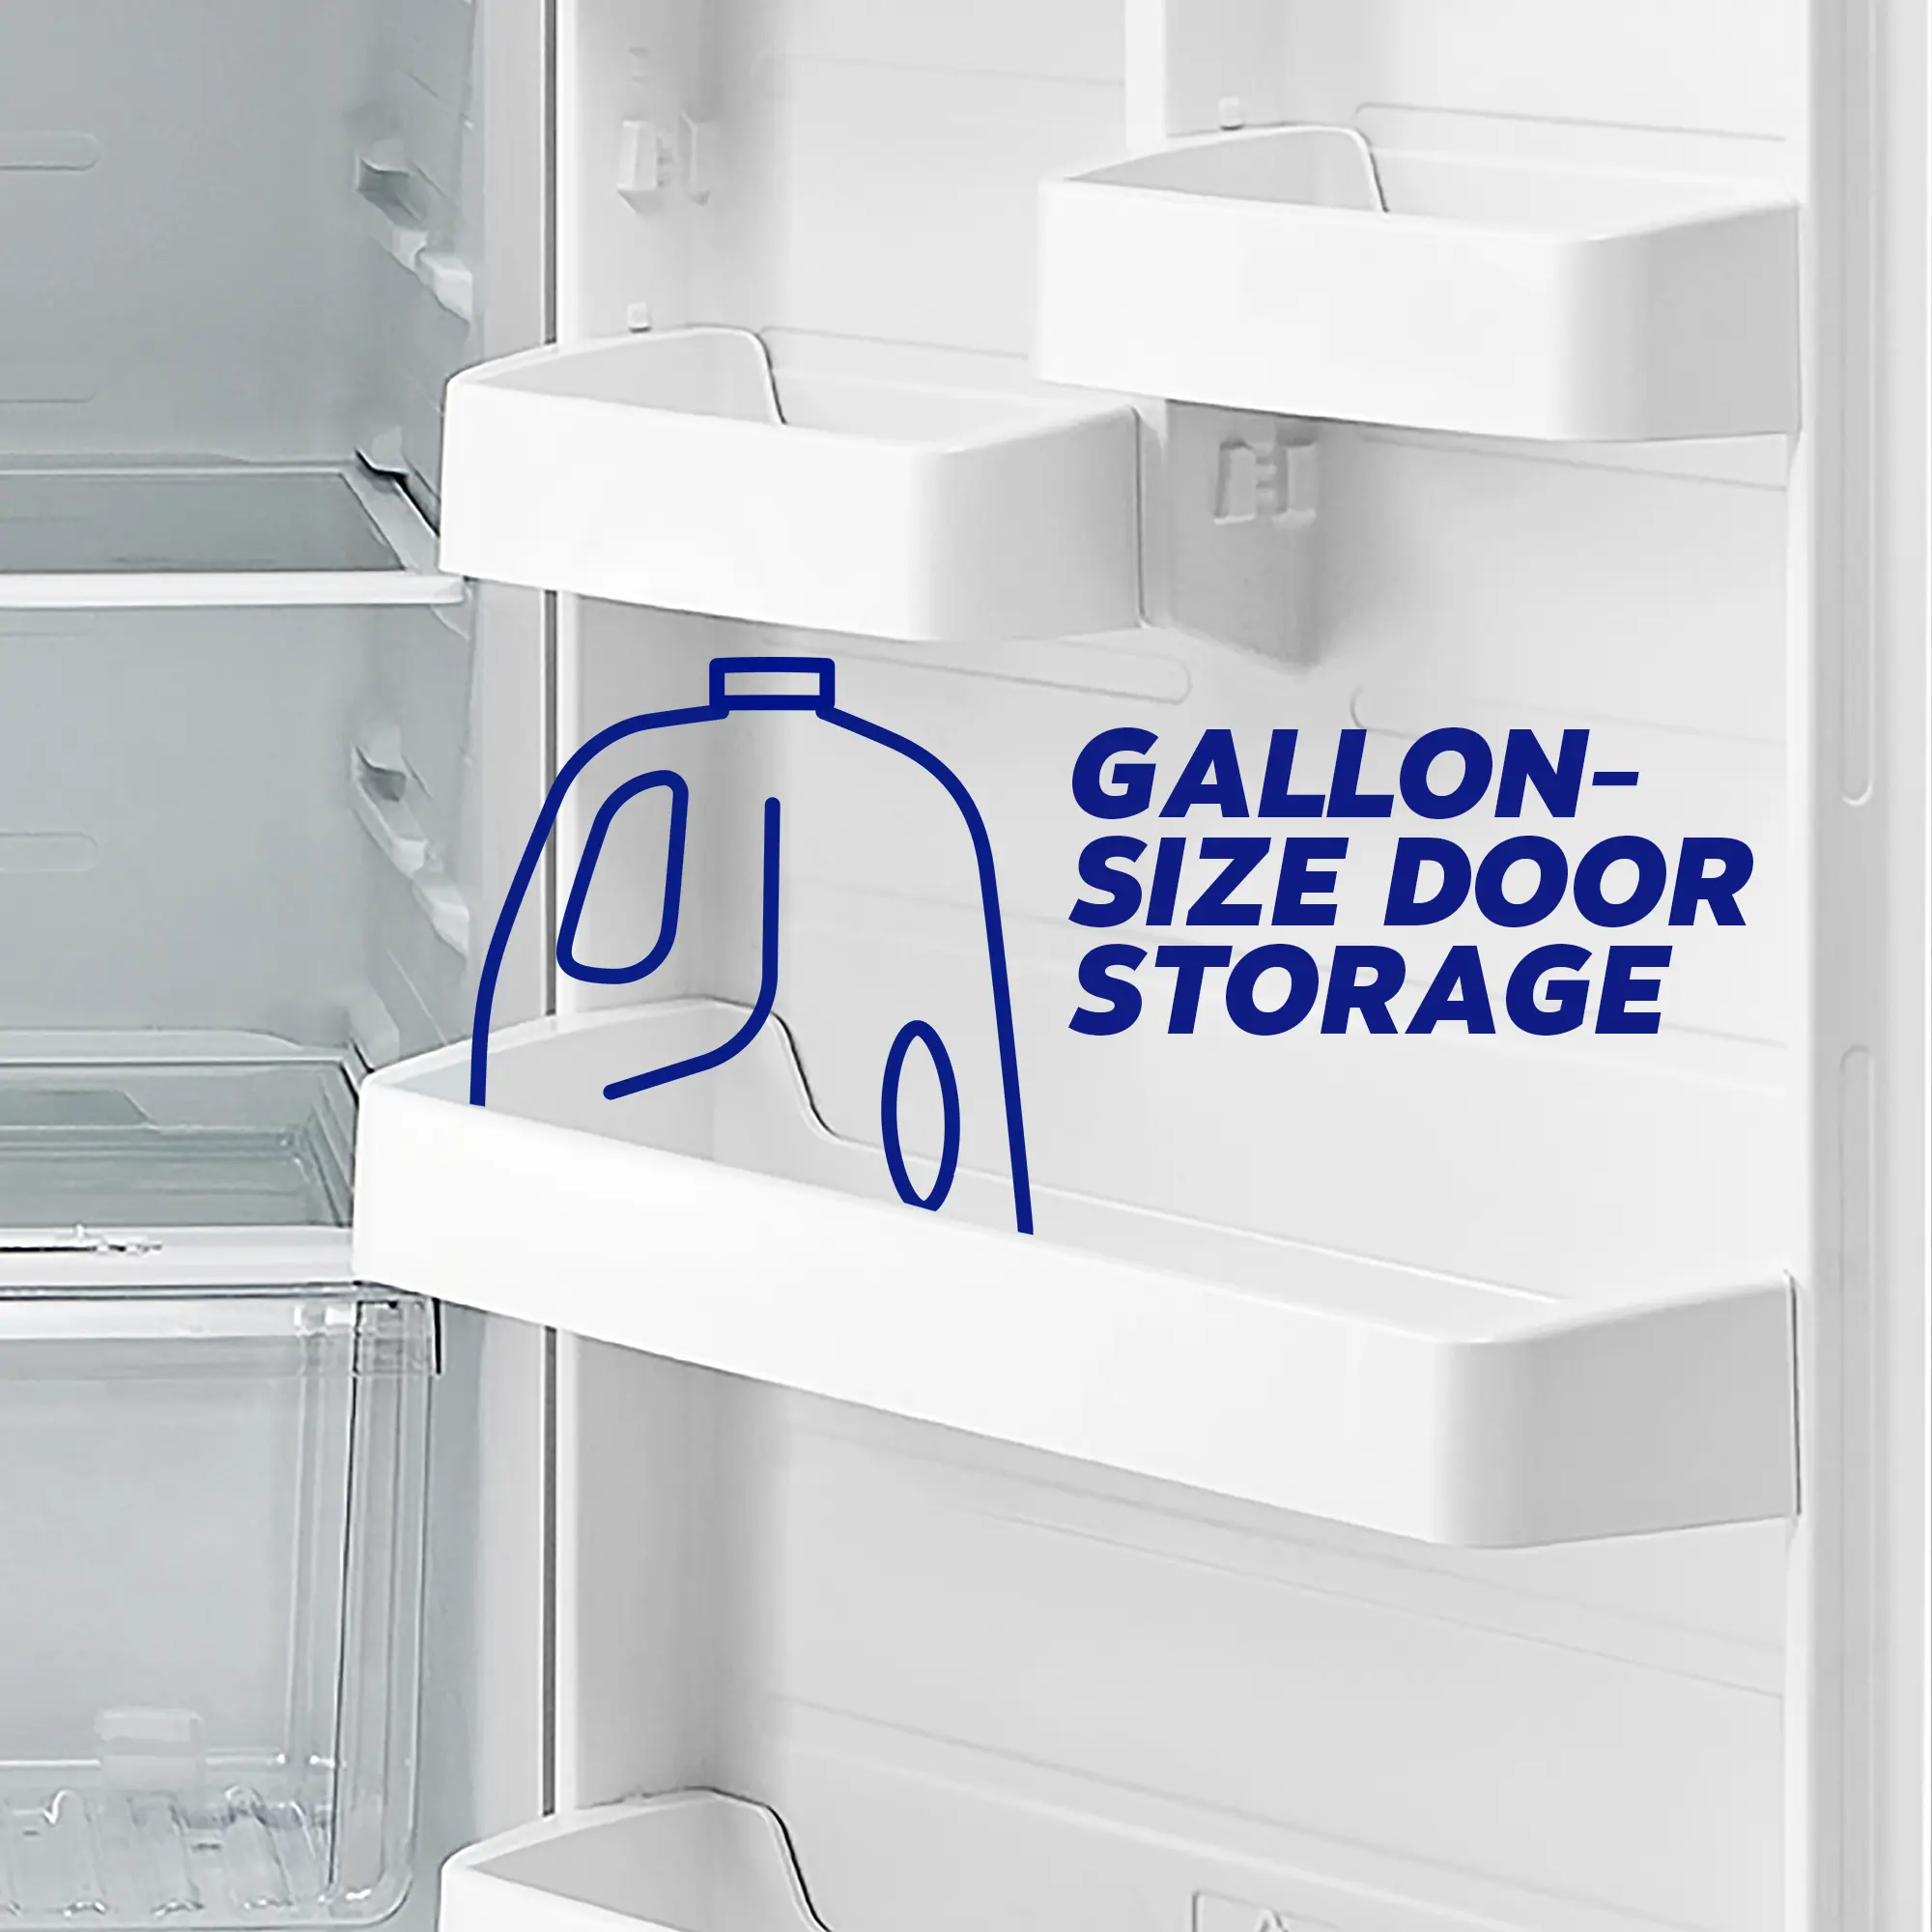 Gallon size door storage